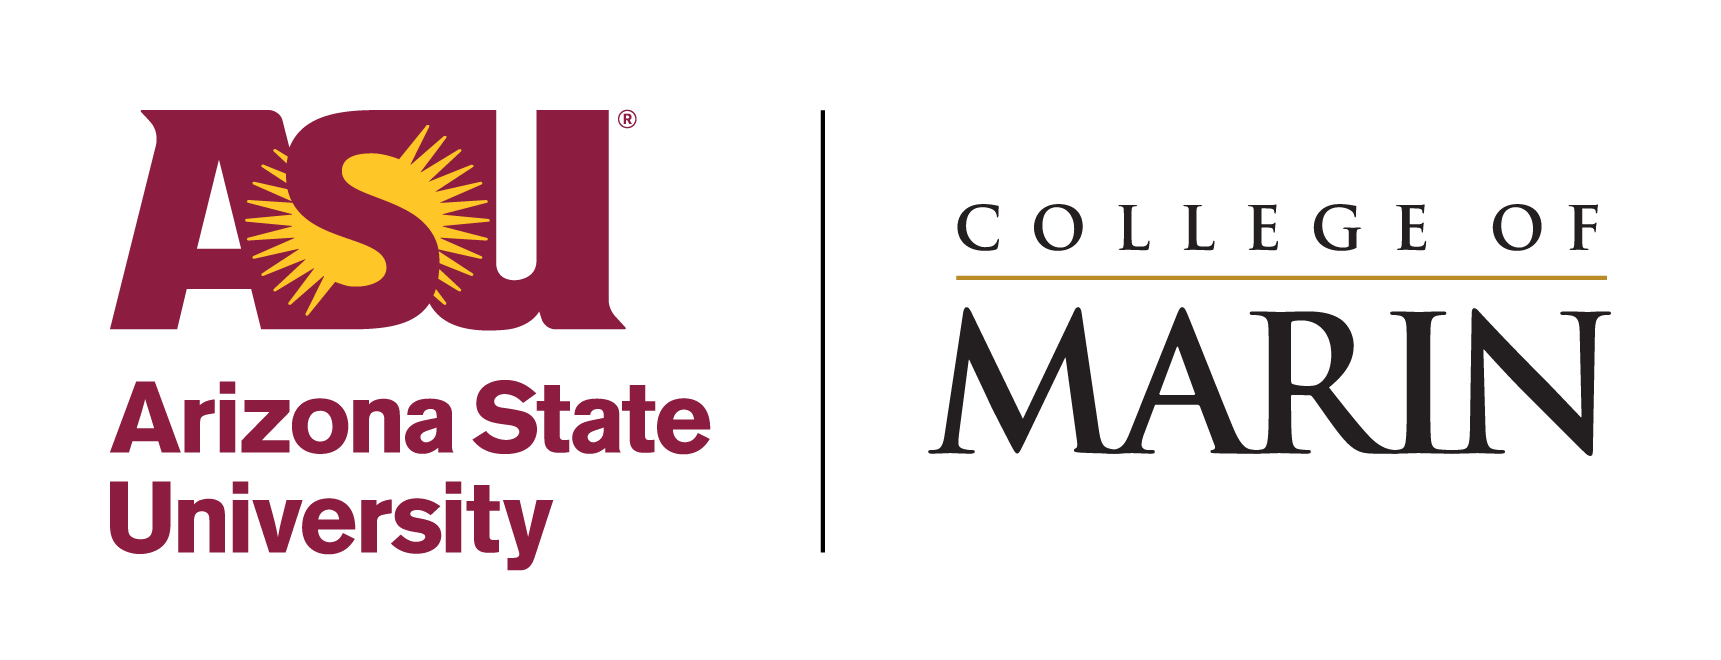 Arizona State University logo next to College of Marin logo